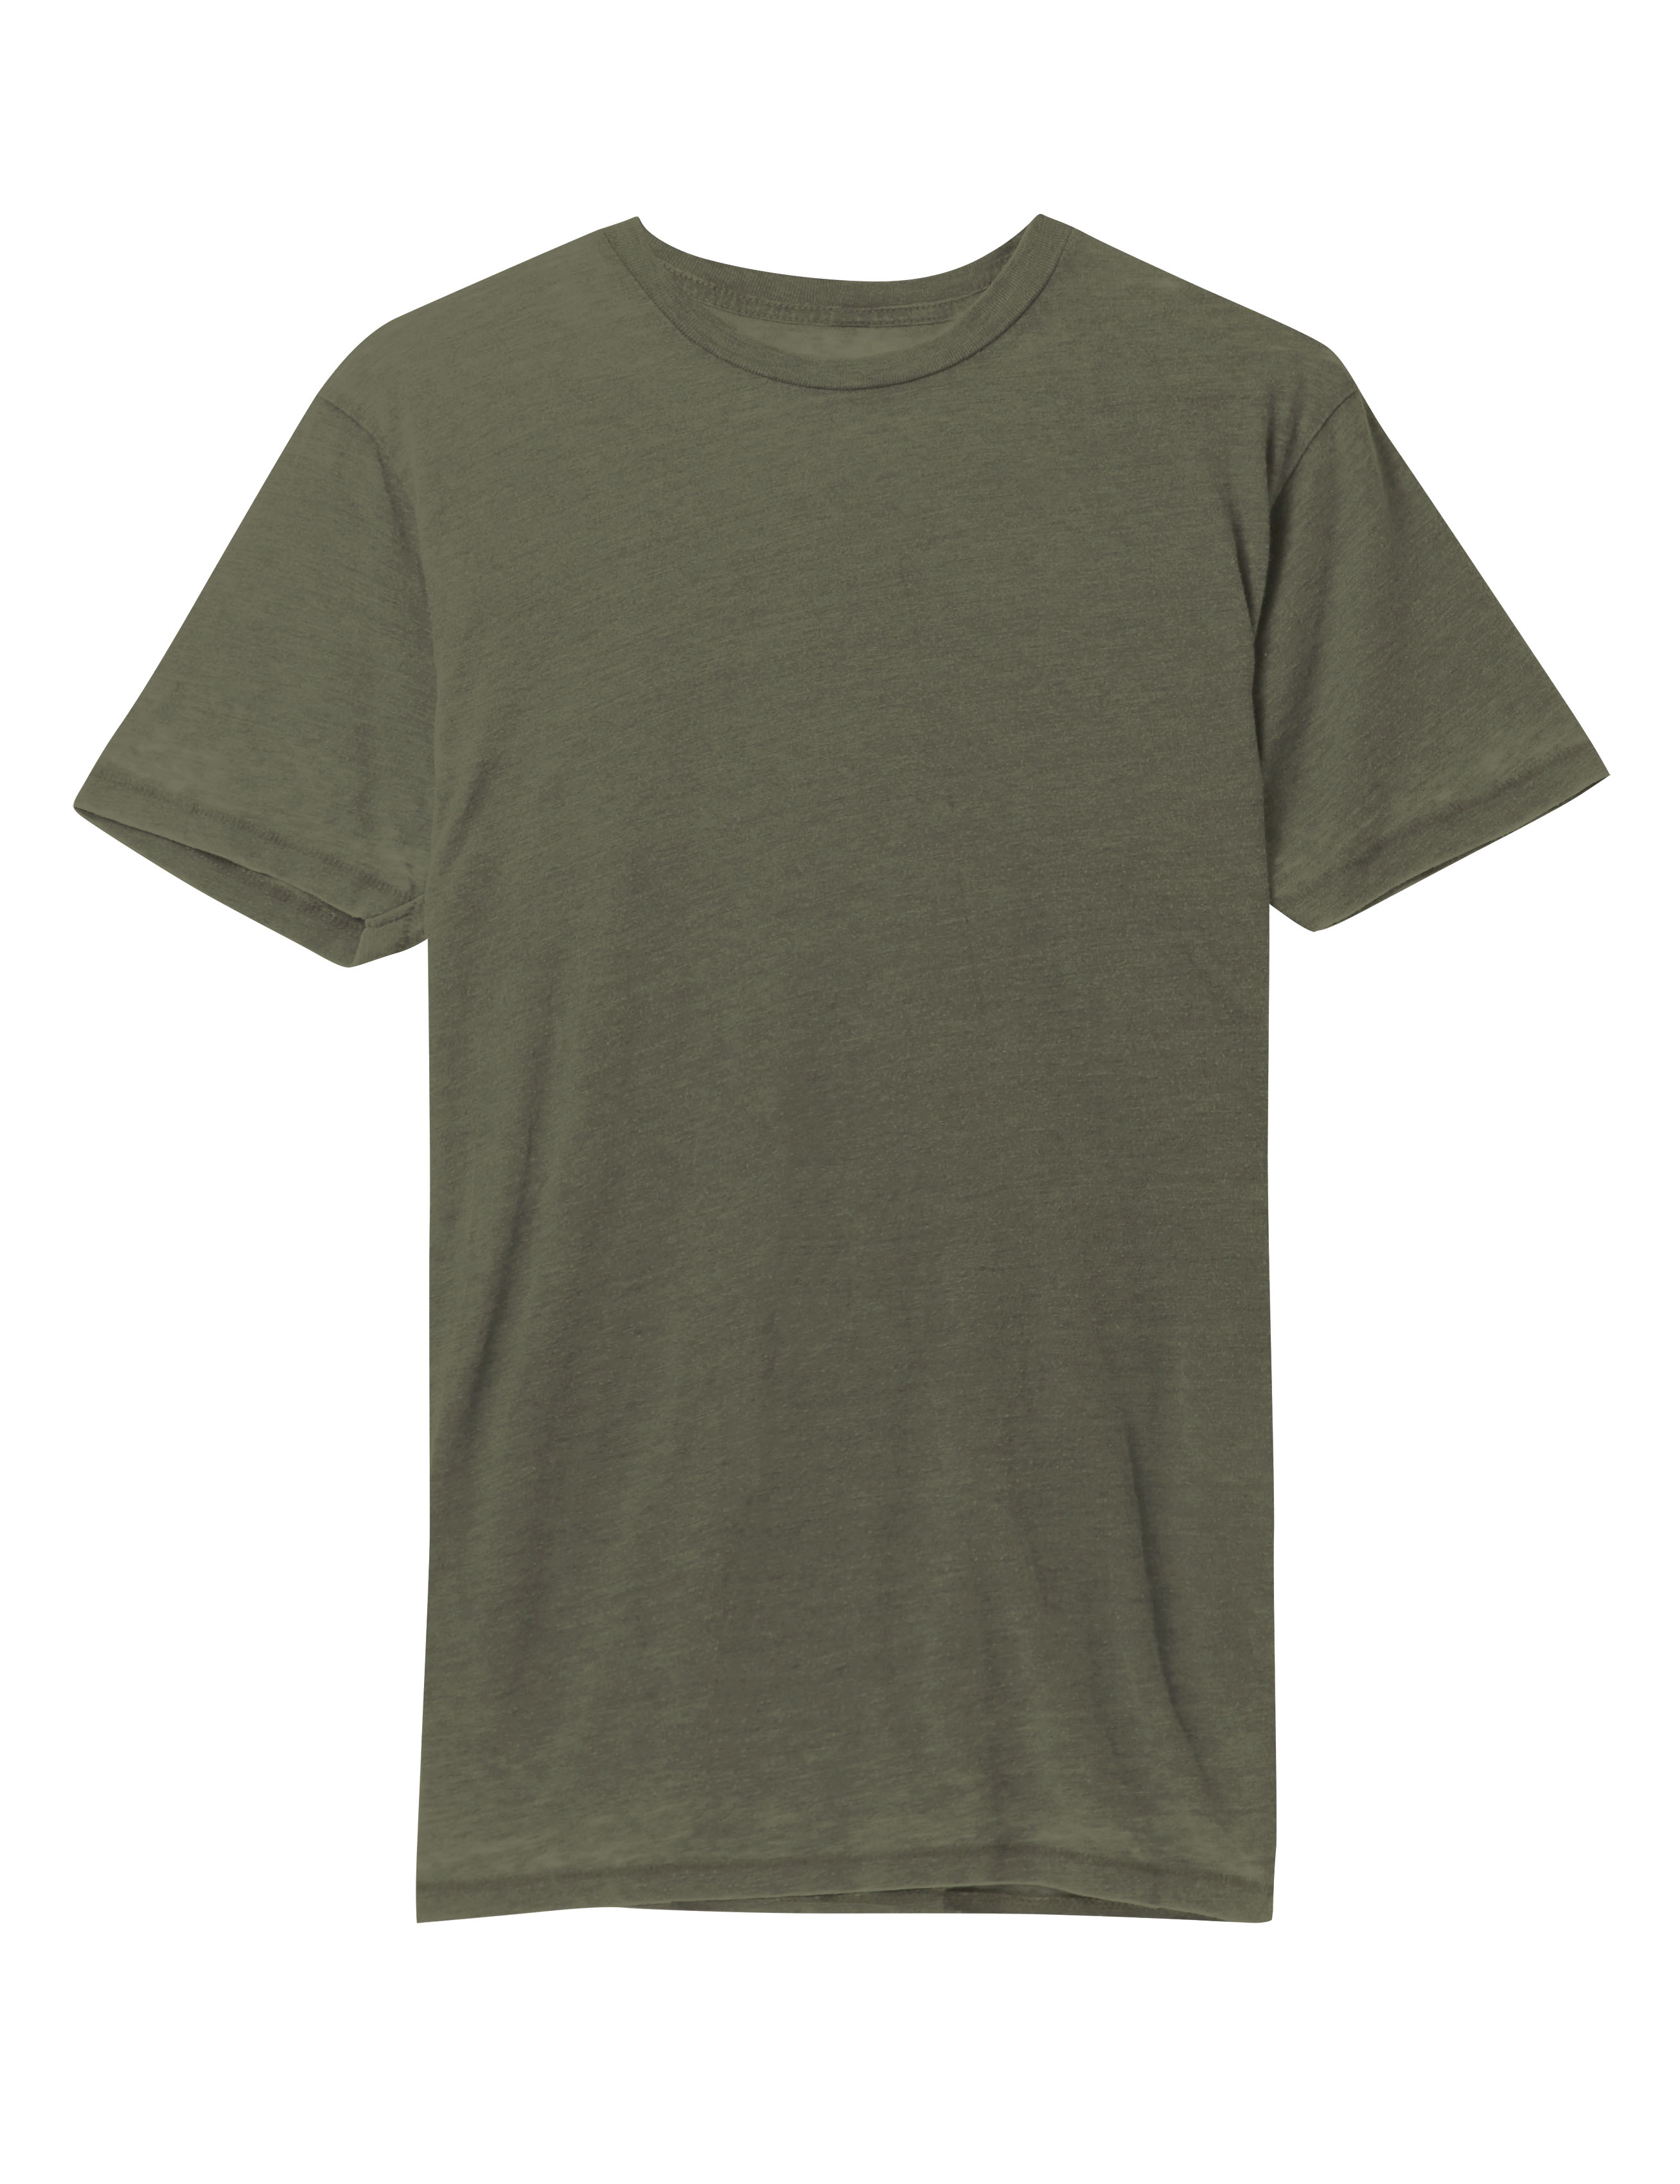 Hat and Beyond Mens Premium T Shirts Burnout Short Sleeve Soft Faded Vintage Crewneck Tee